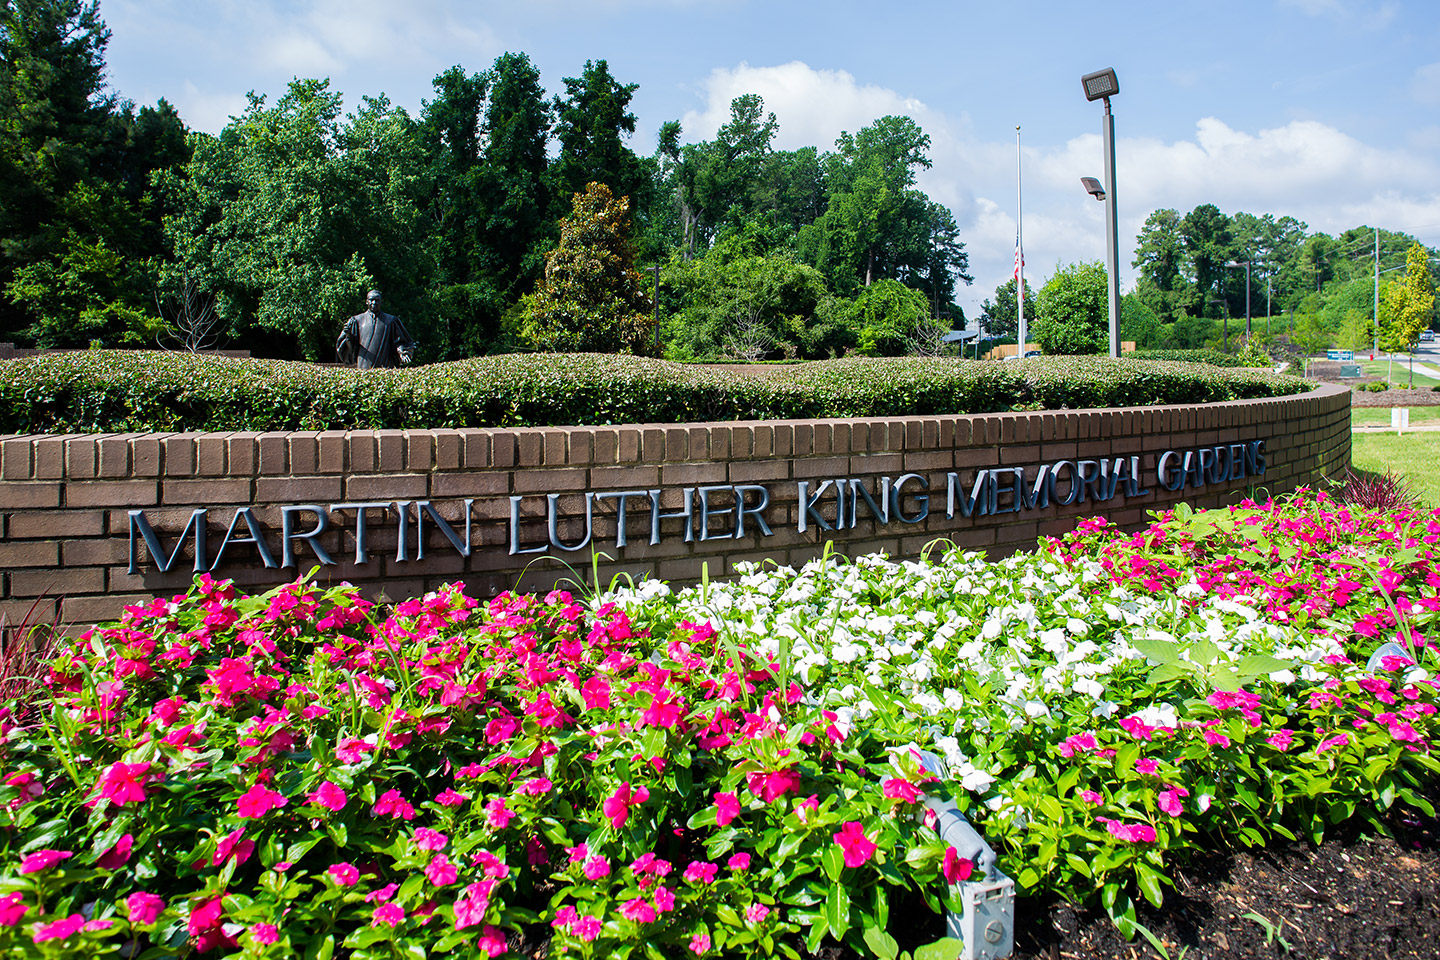 Martin Luther King Jr. Memorial Gardens